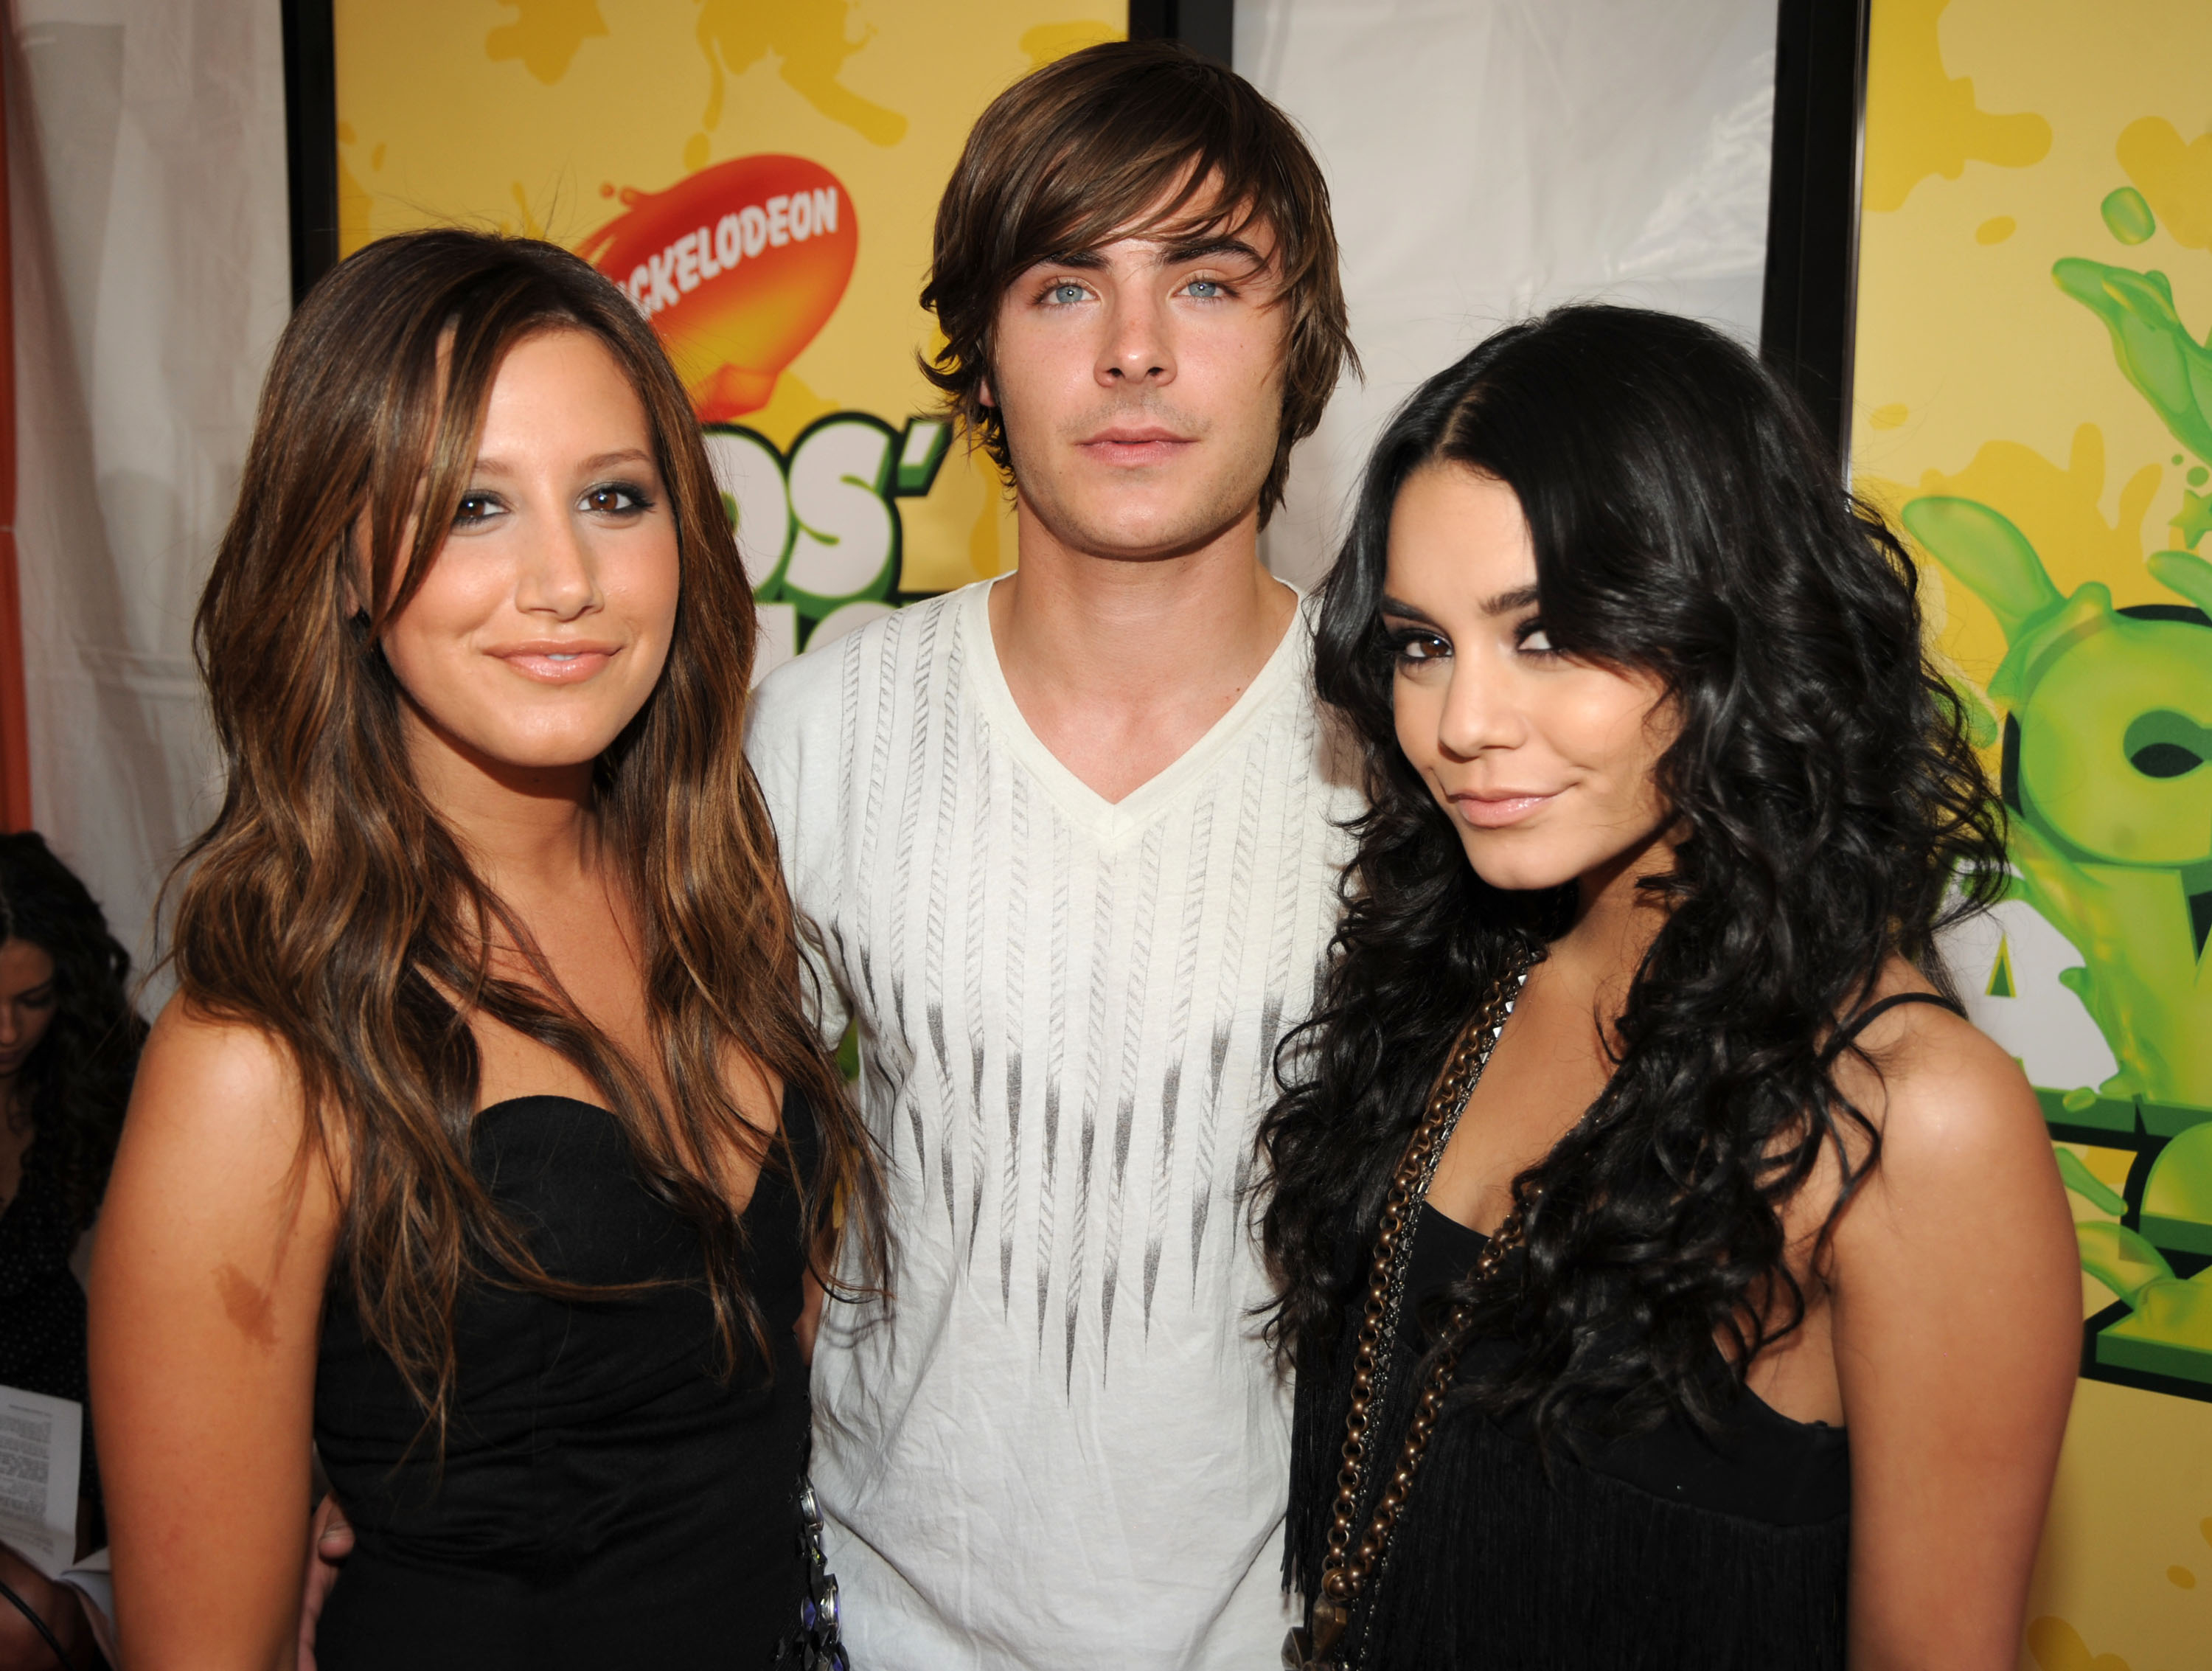 Ashley, Zac, and Vanessa at a media event